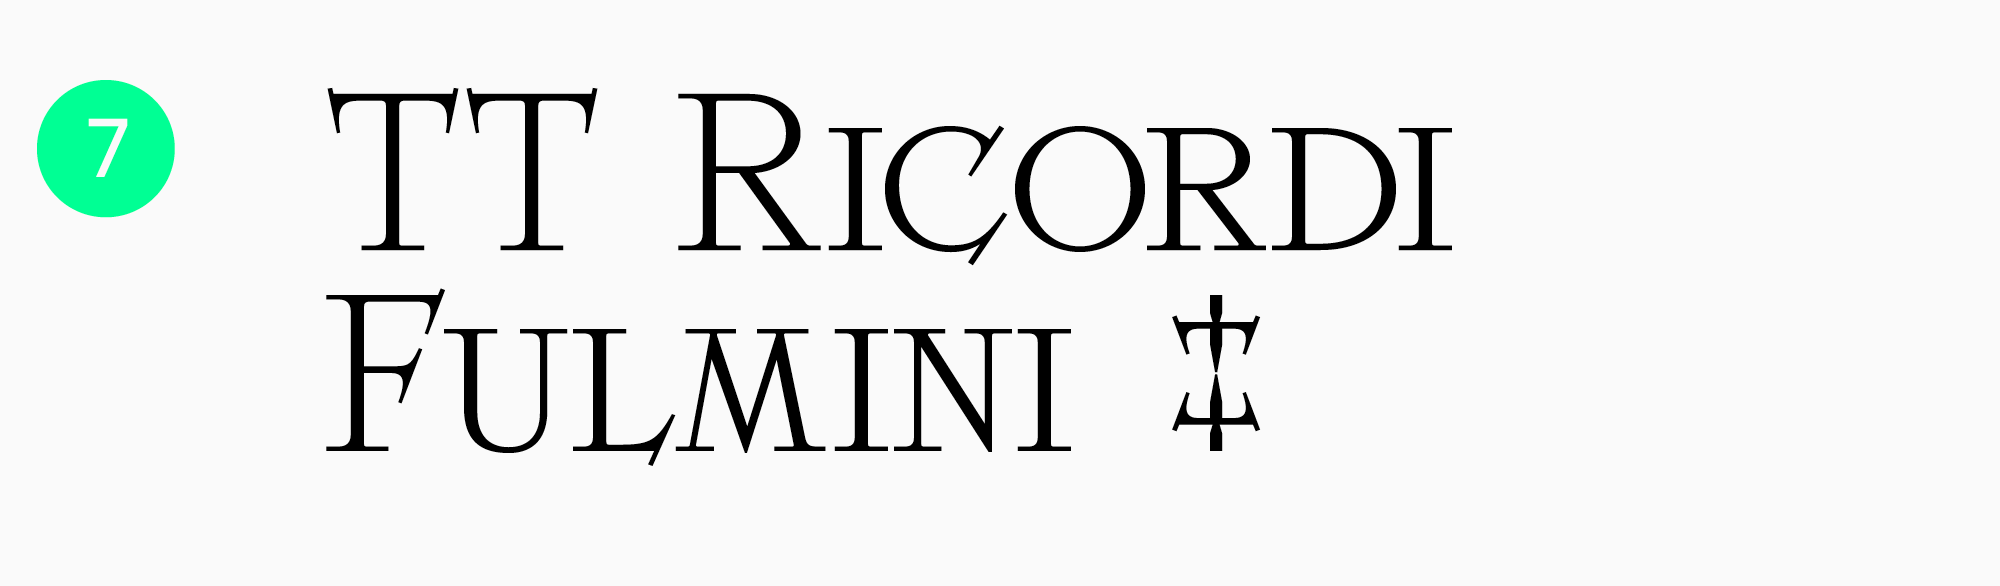 TT Ricordi Fulmini best font for posters designing